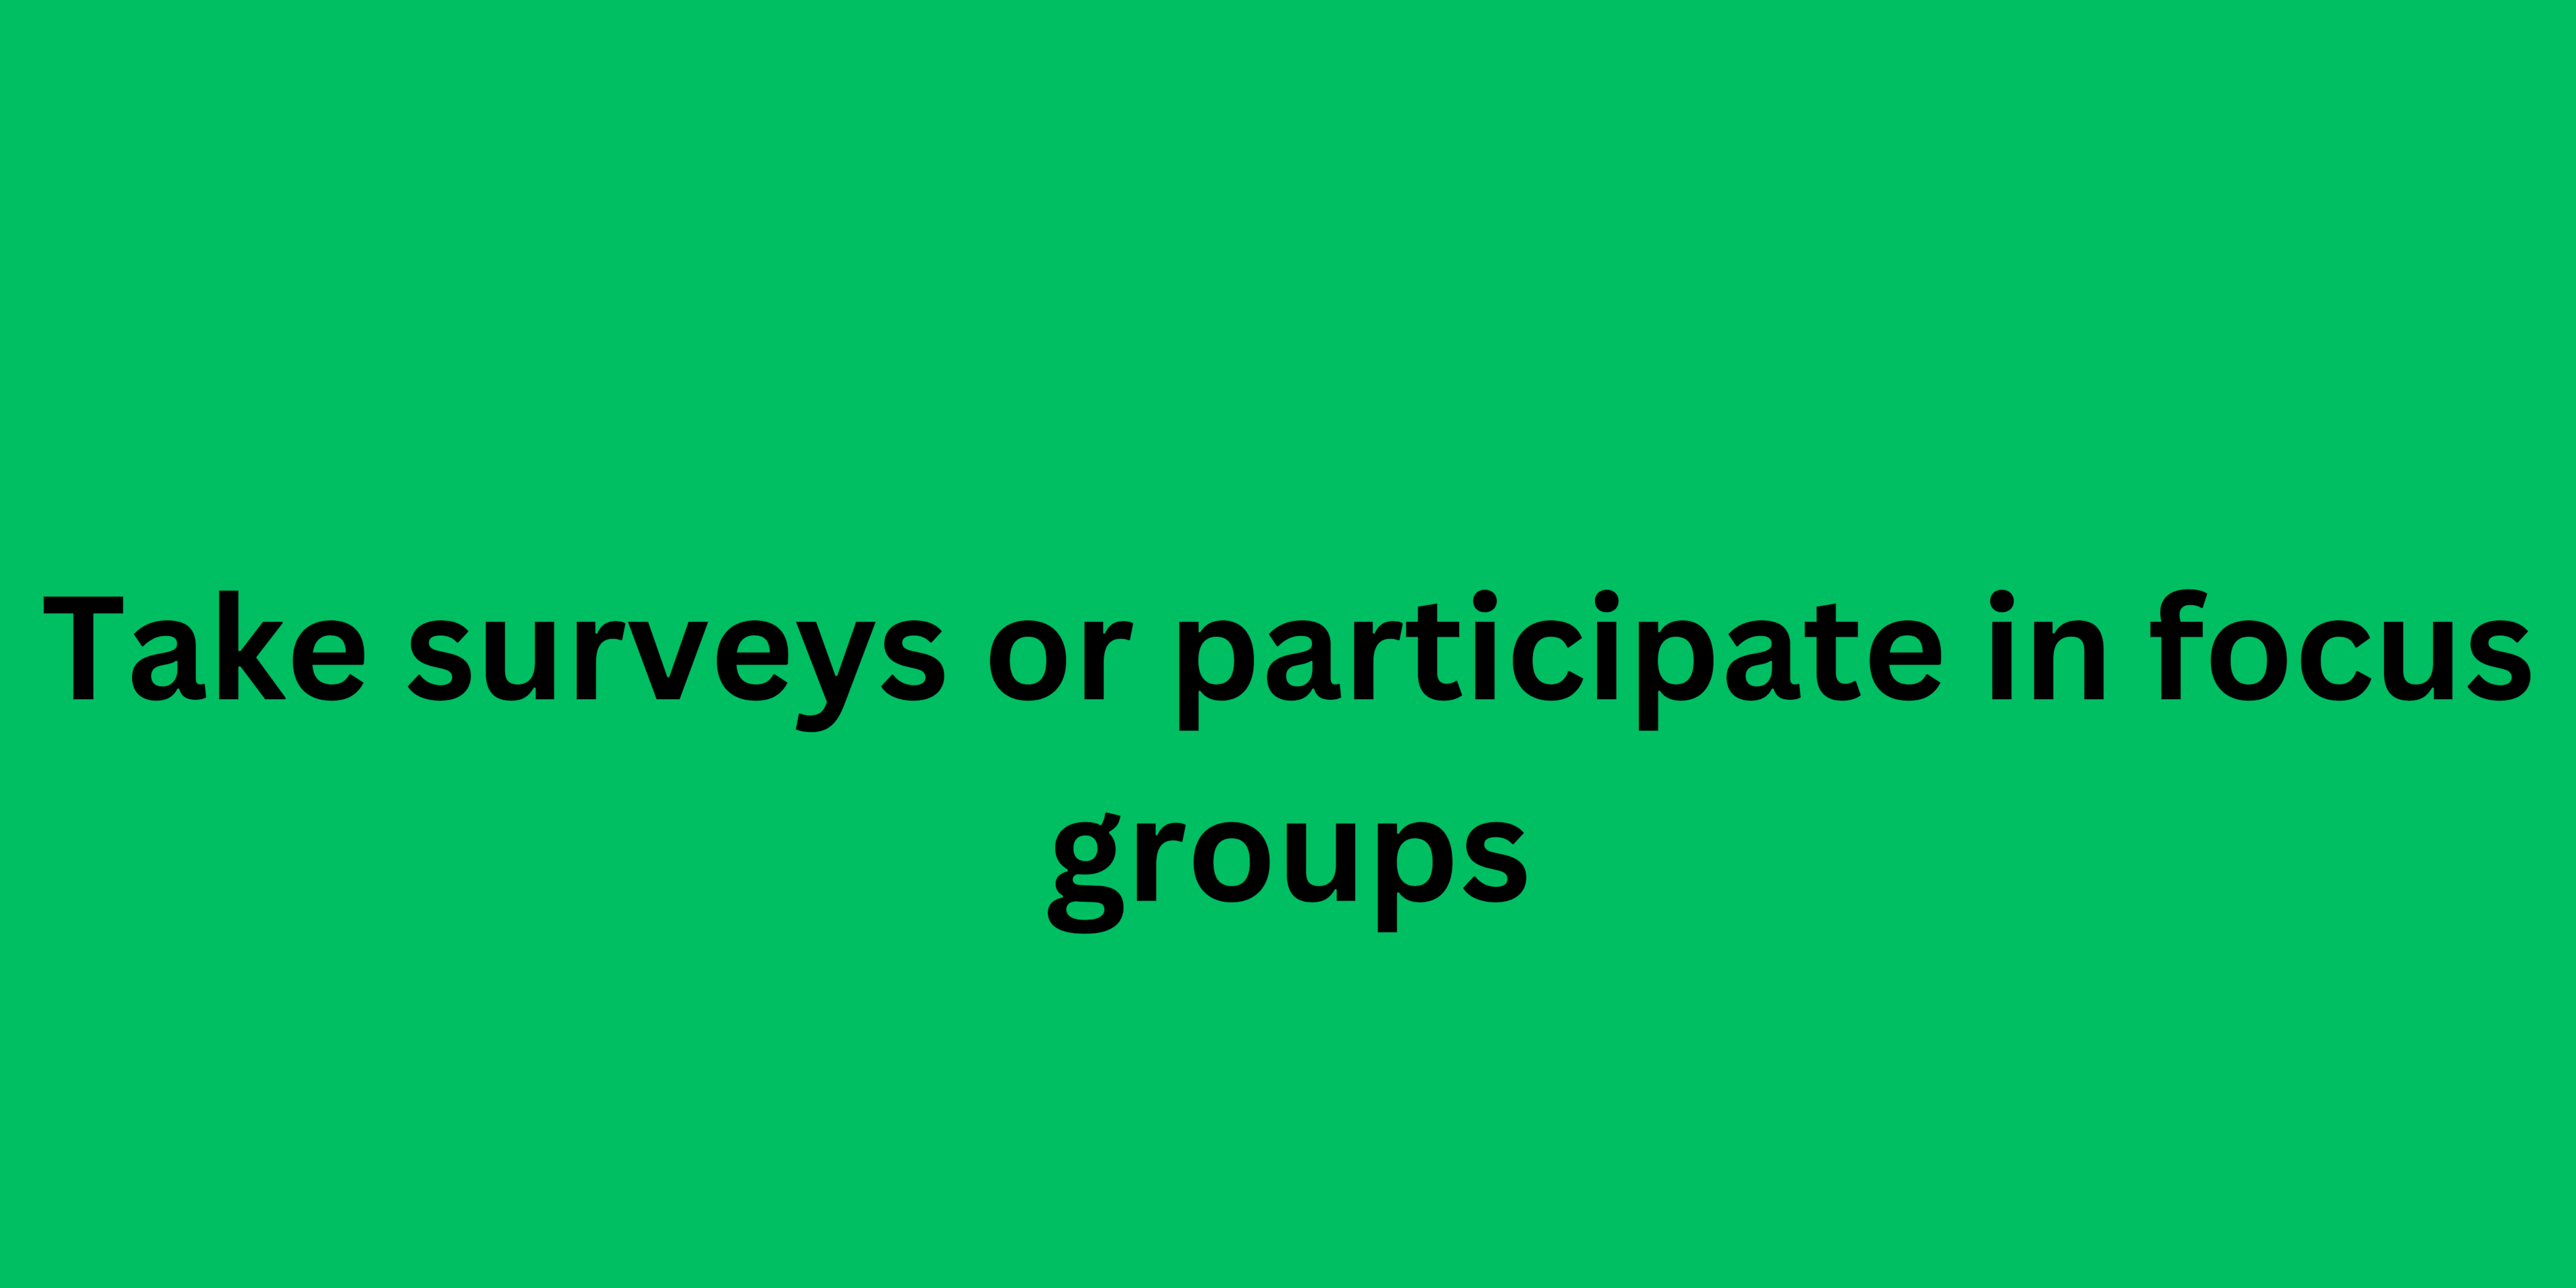 Take surveys or participate in focus groups